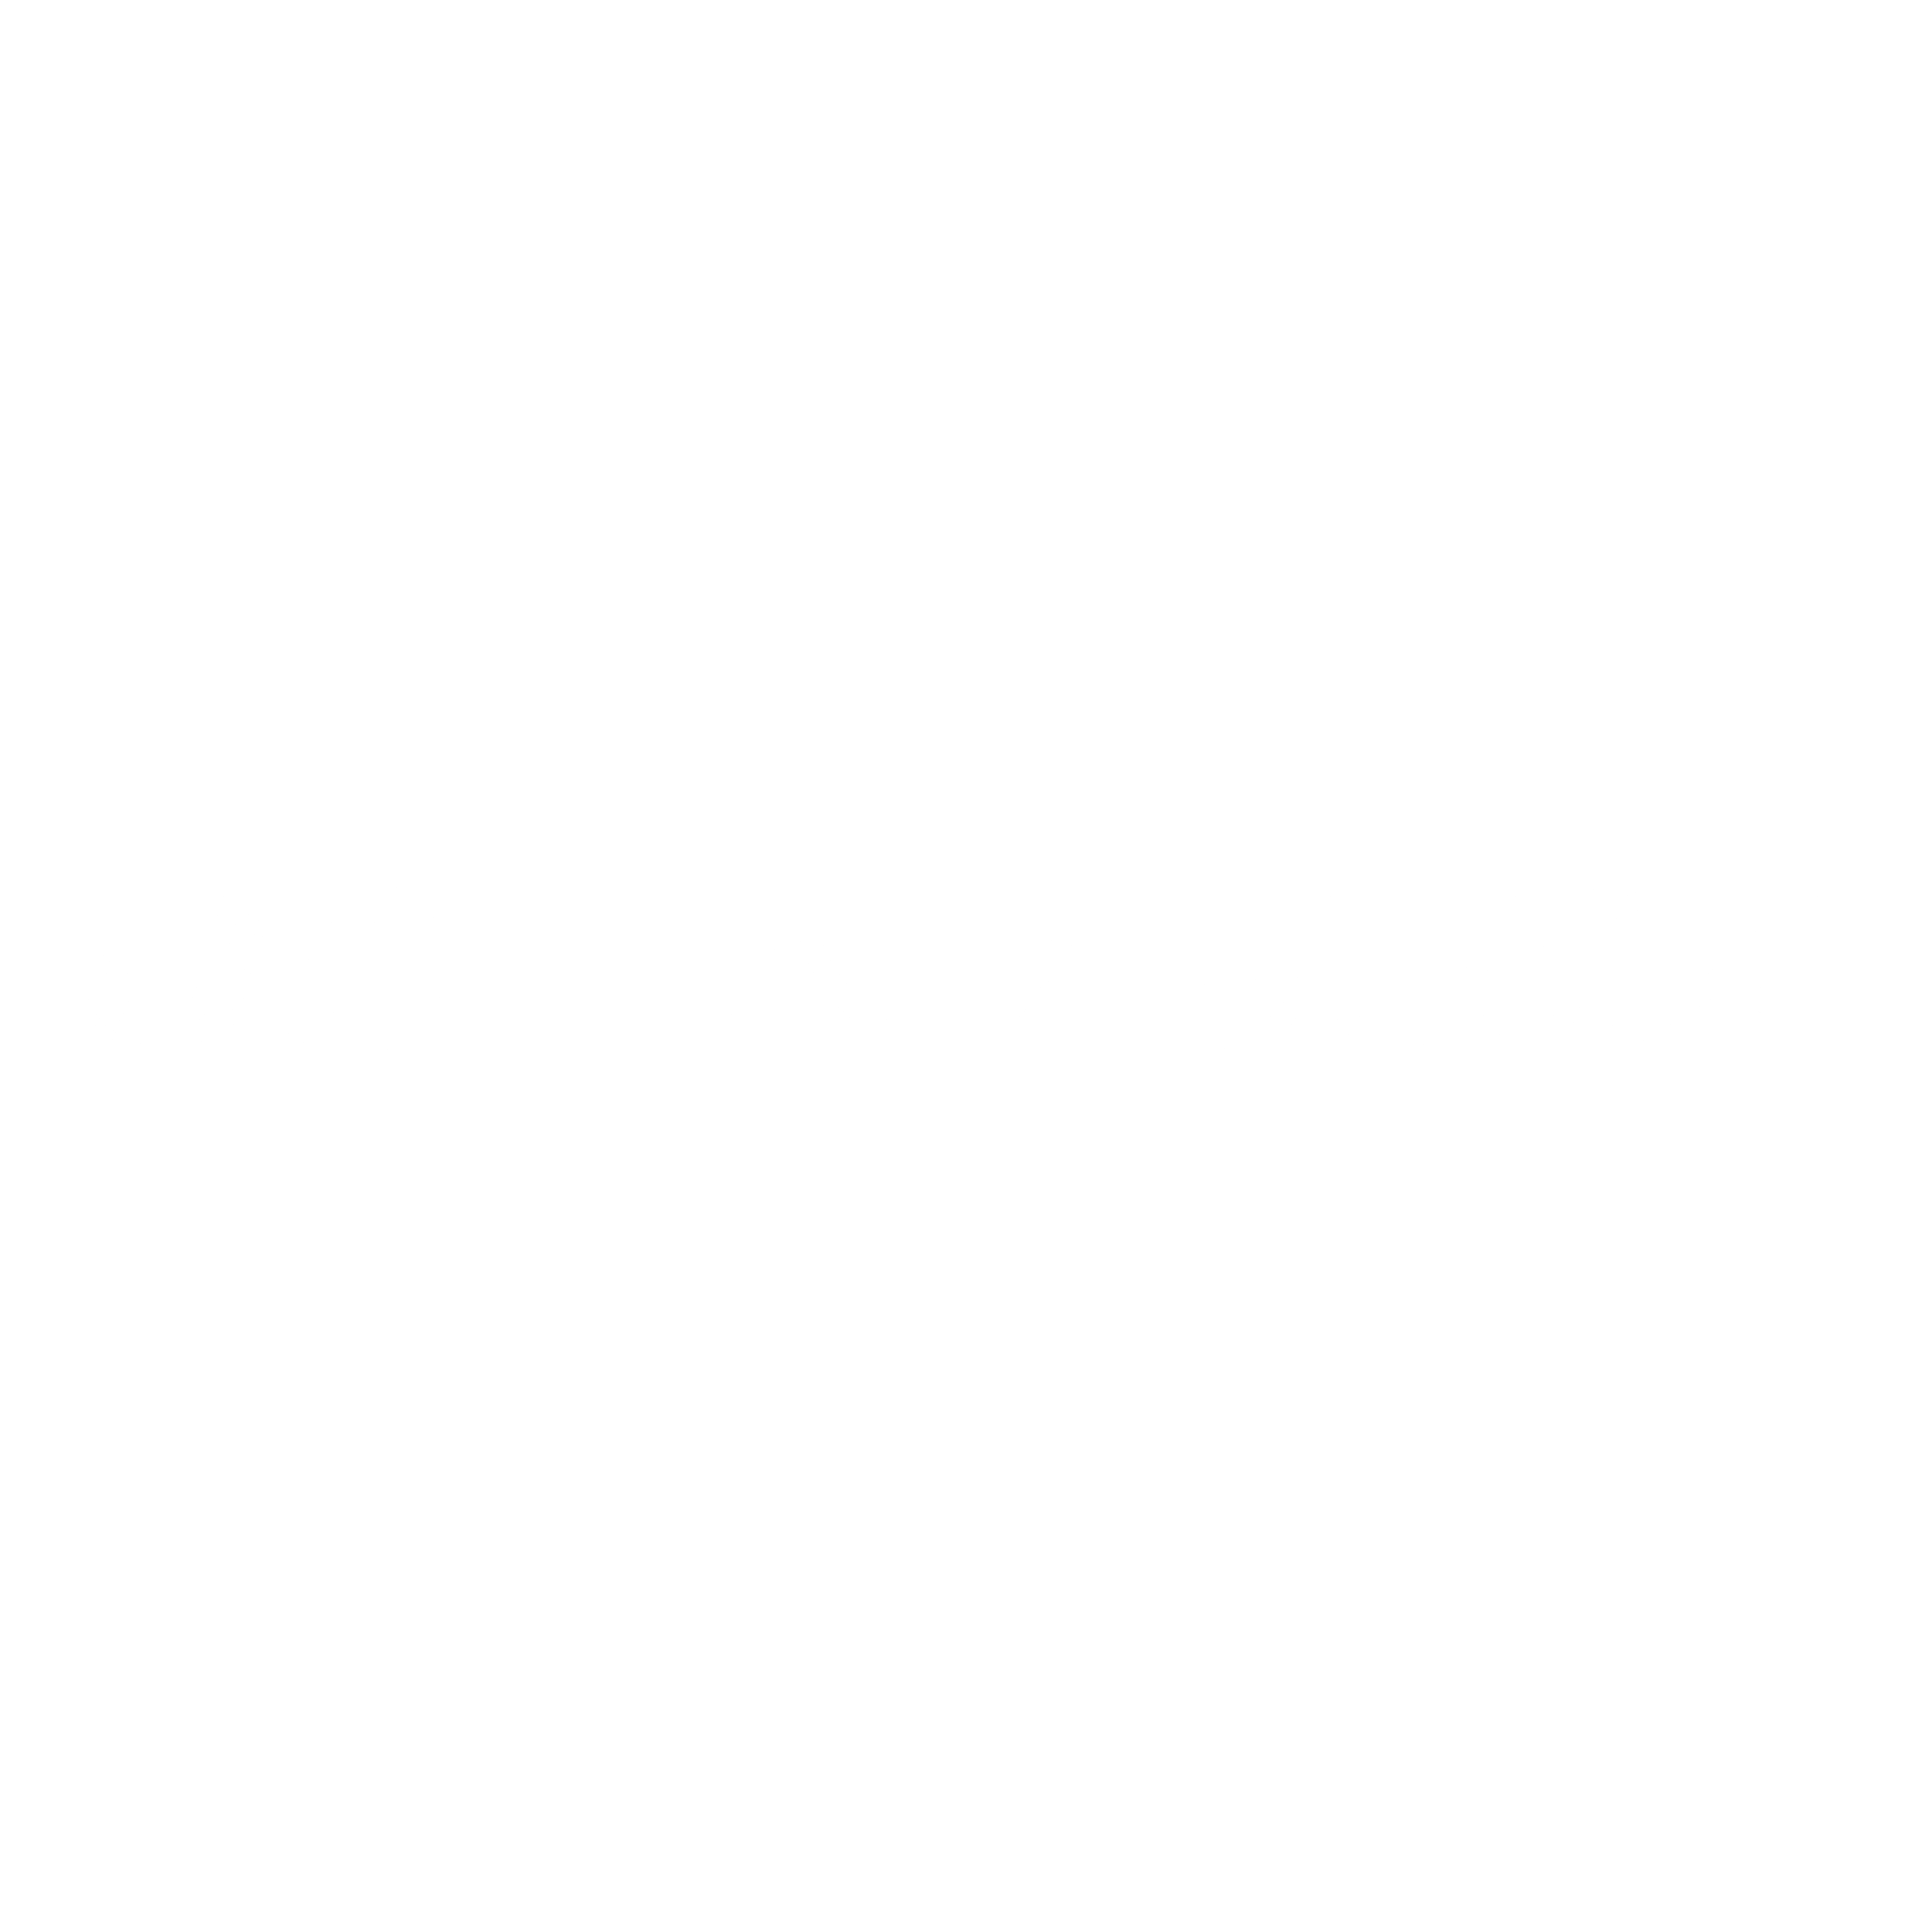 JCI Logo - JCI Logo PNG Transparent & SVG Vector - Freebie Supply